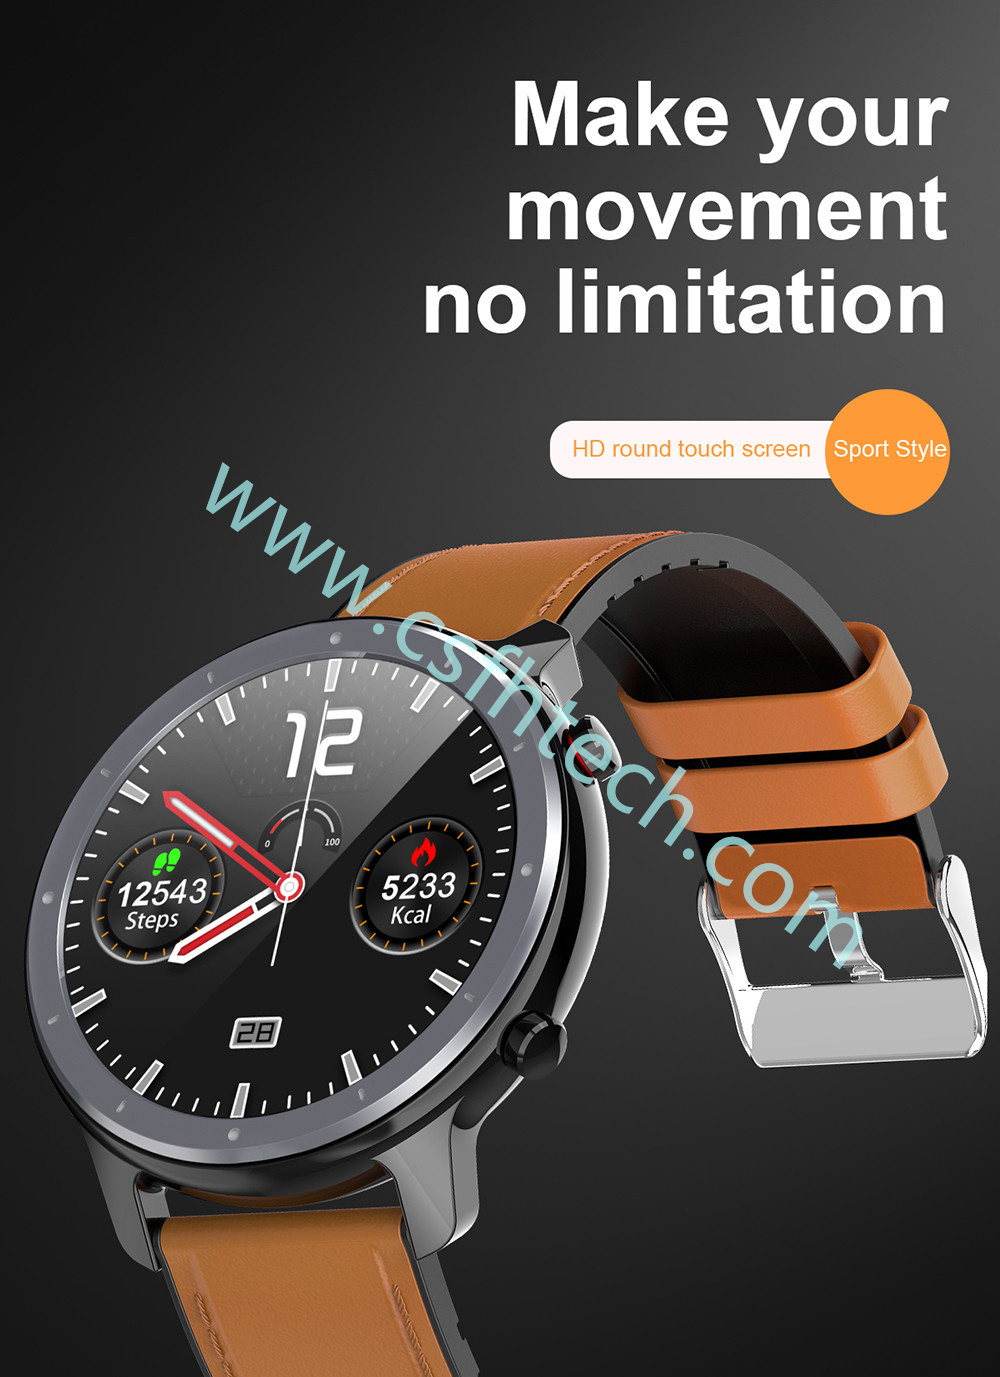 Csfhtech 1 2021 L11 Smart Watch Men ECG+PPG Heart Rate Blood Pressure Monitor IP68 Waterproof Weather Smartwatch watches (1).jpg